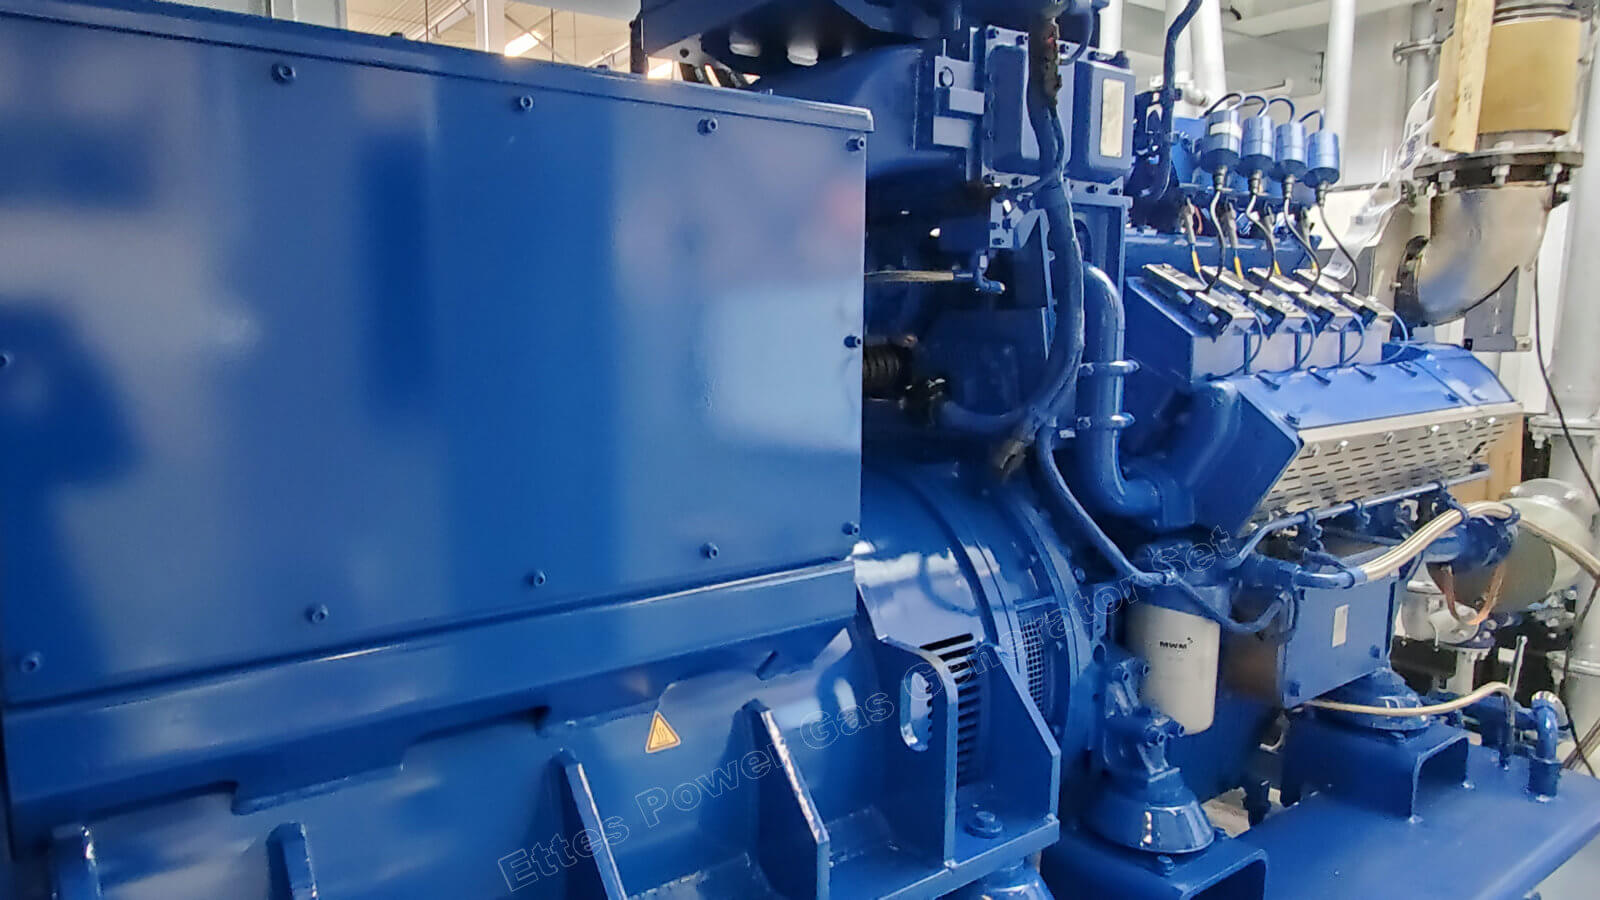 Leroy Somer Alternator for MWM Series Digester Biogas Engine Generator ETTES POWER